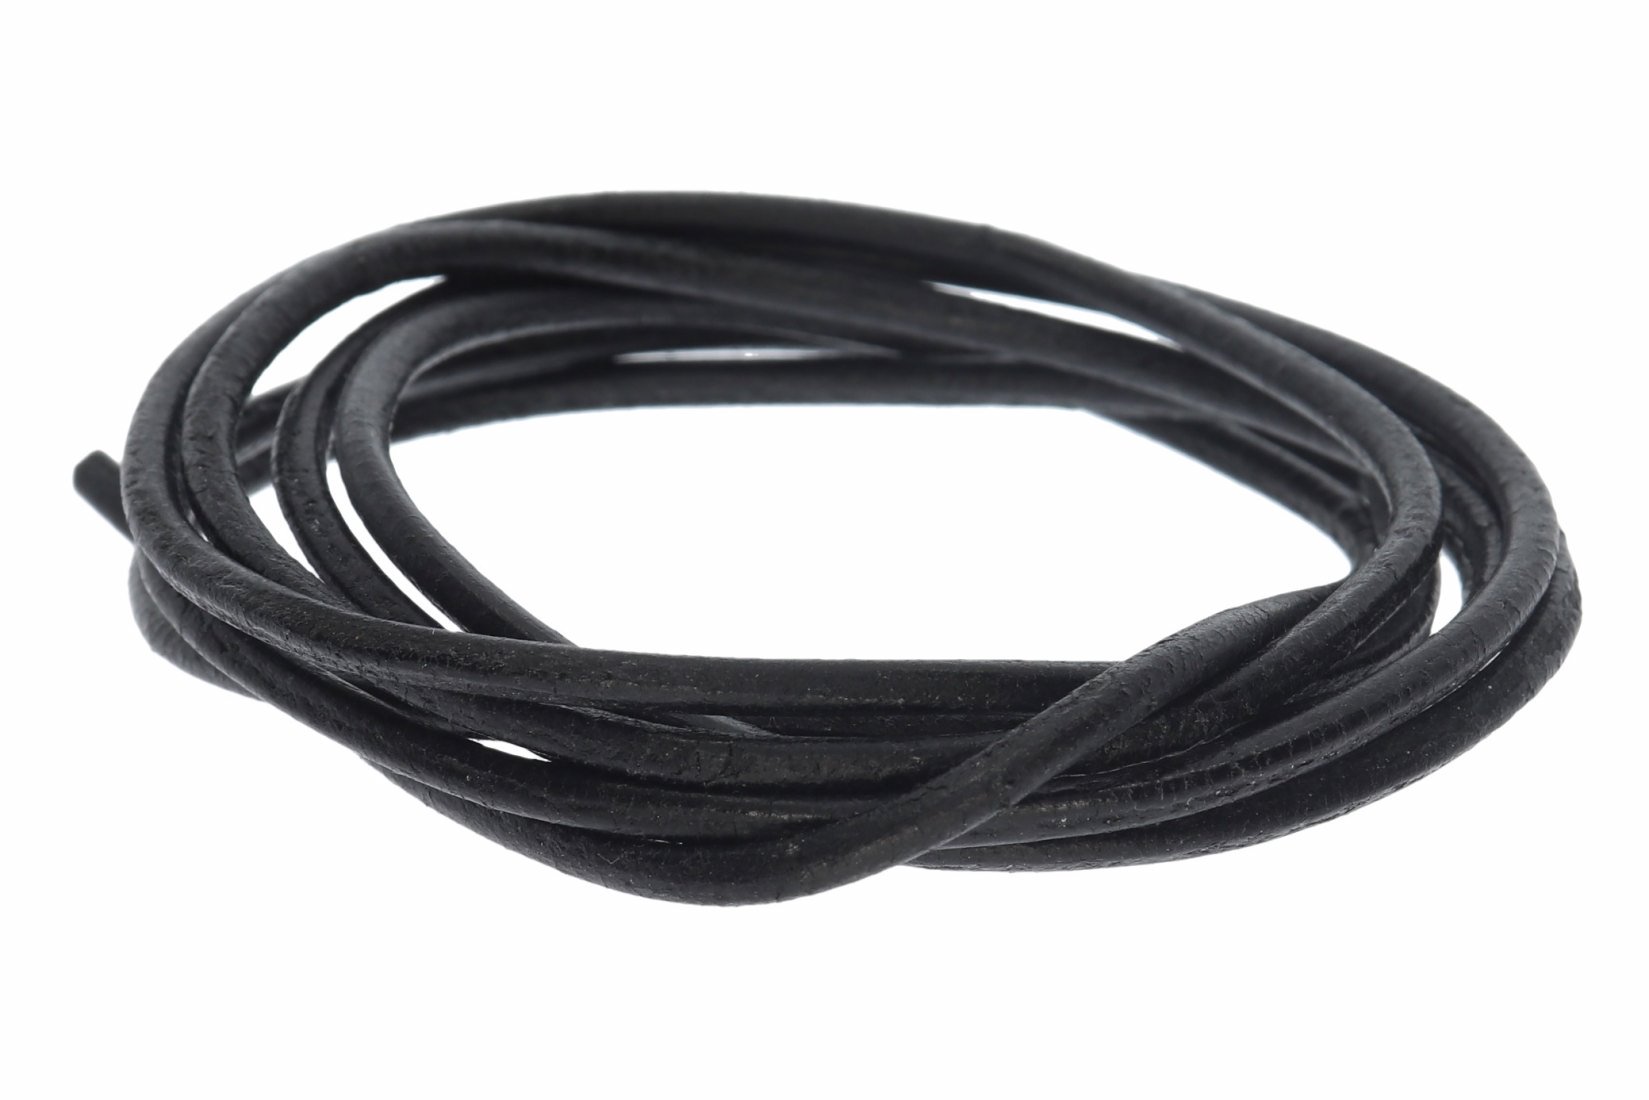 Lederband schwarz -  Lederbänder Lederriemen Lederschnur 2 mm Ø - 100cm L220